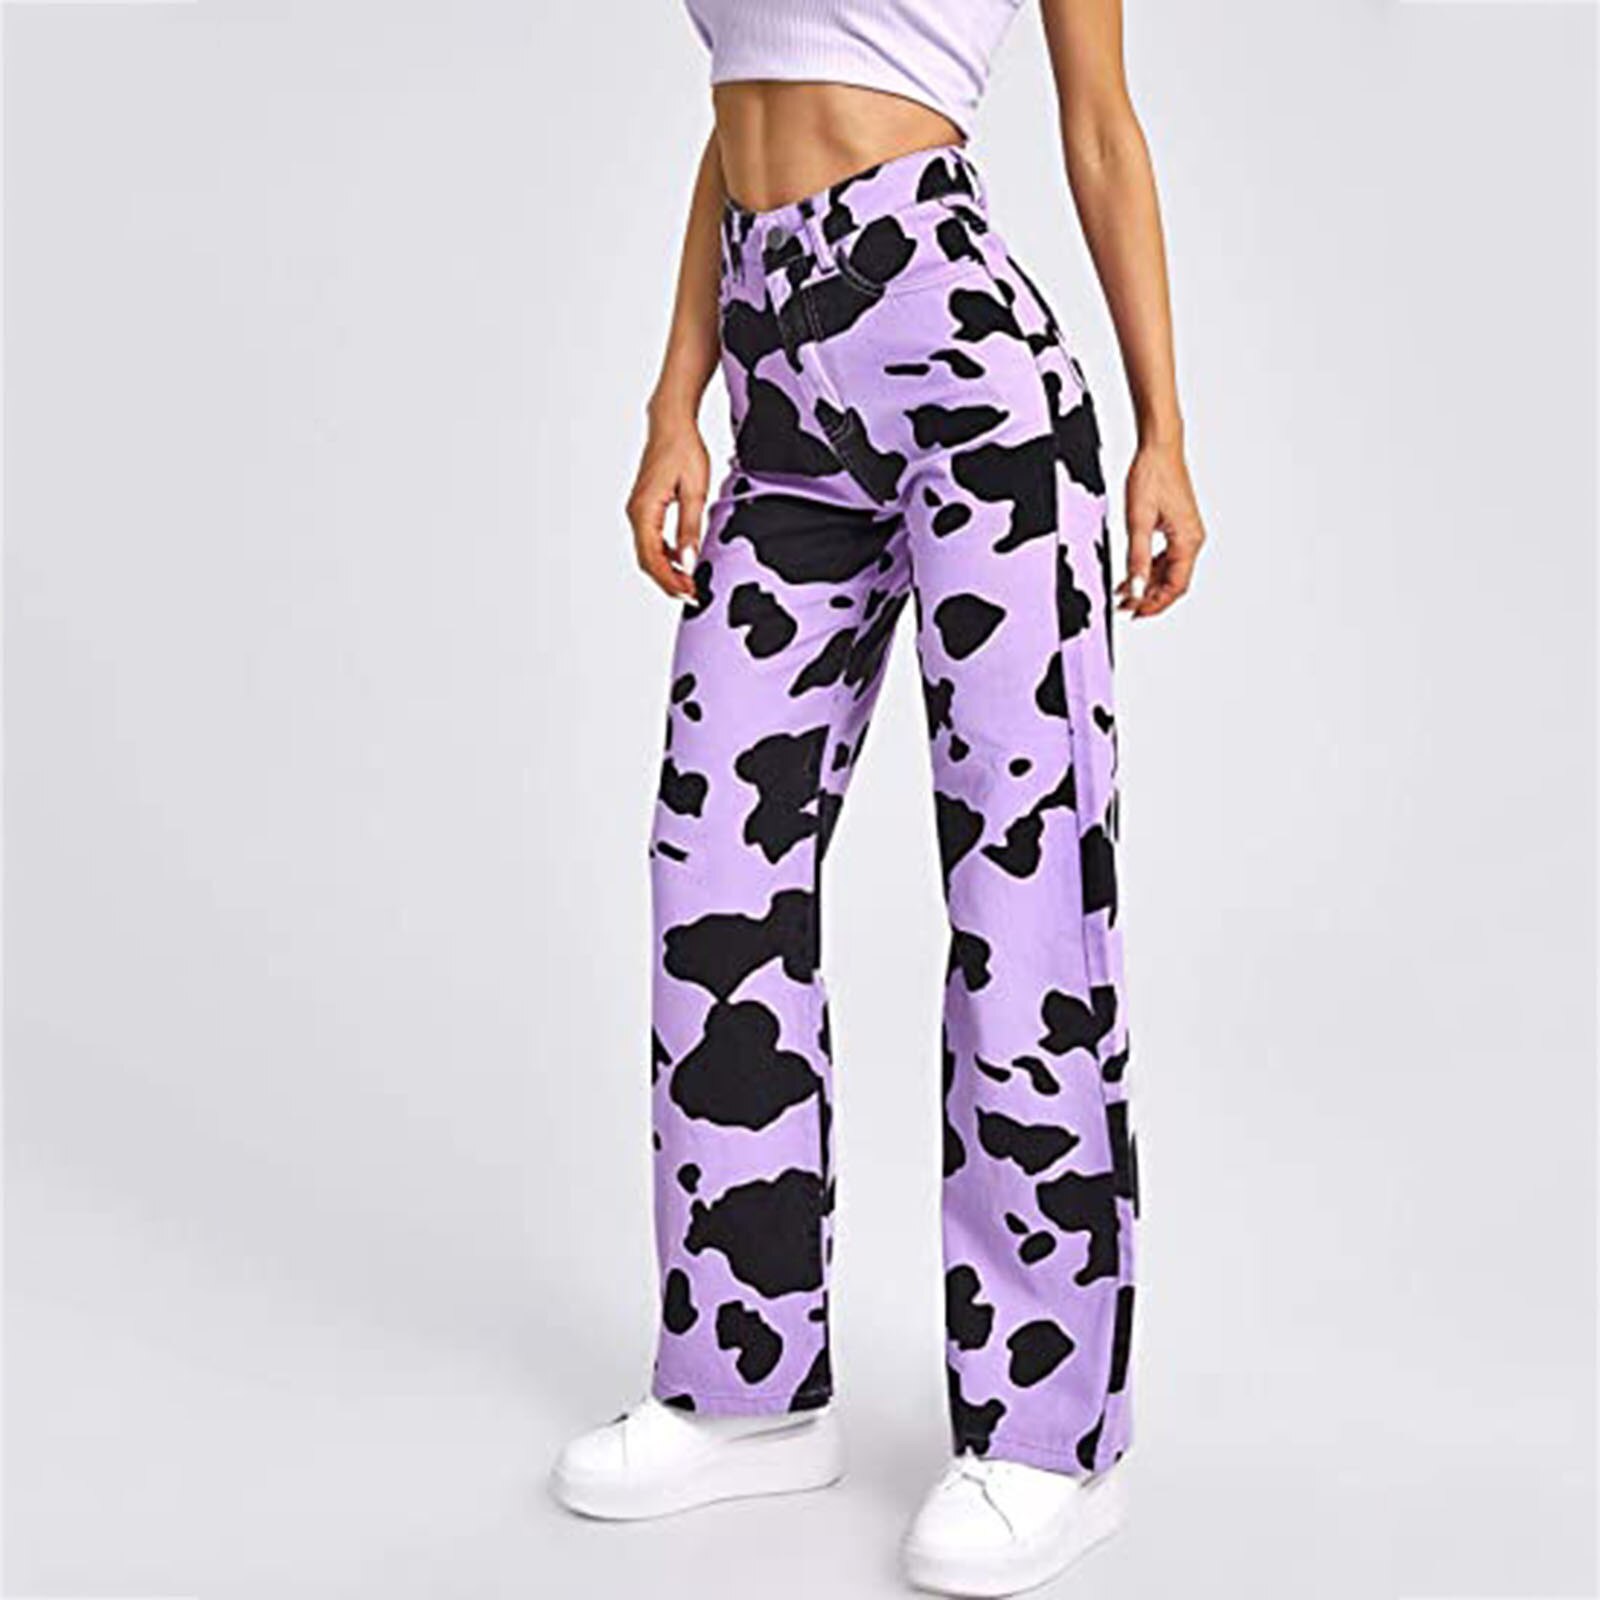 Women Purple Cow Print Jeans Pants High Waist Loose Pocket Wide Leg Pants Fashion Denim Trouser 1 - The Cow Print